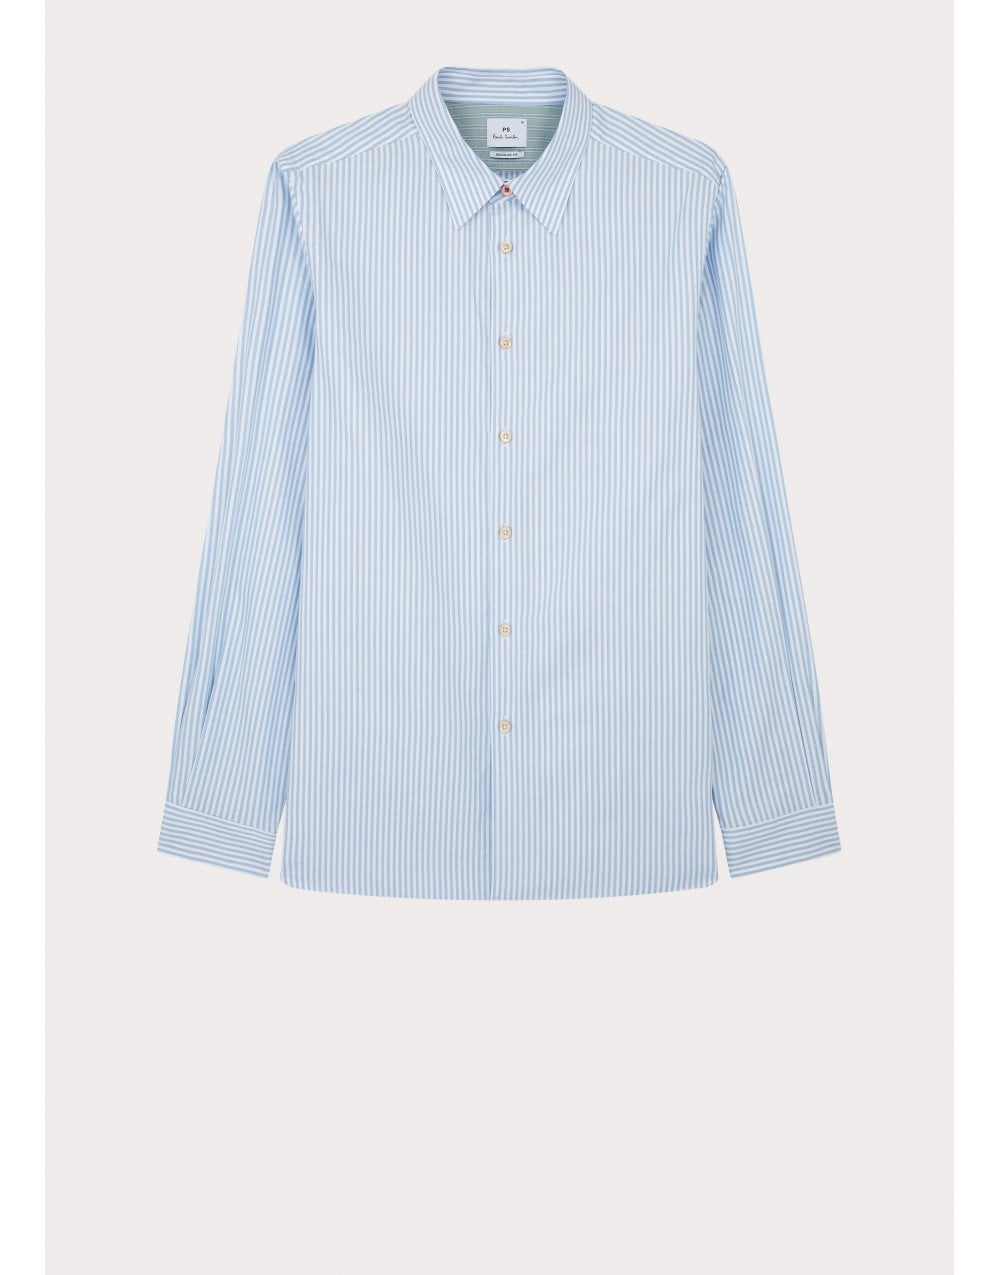 Paul Smith Paul Smith Stripe Regular Fit Shirt Col: 41 Blue/white, Size: Xl